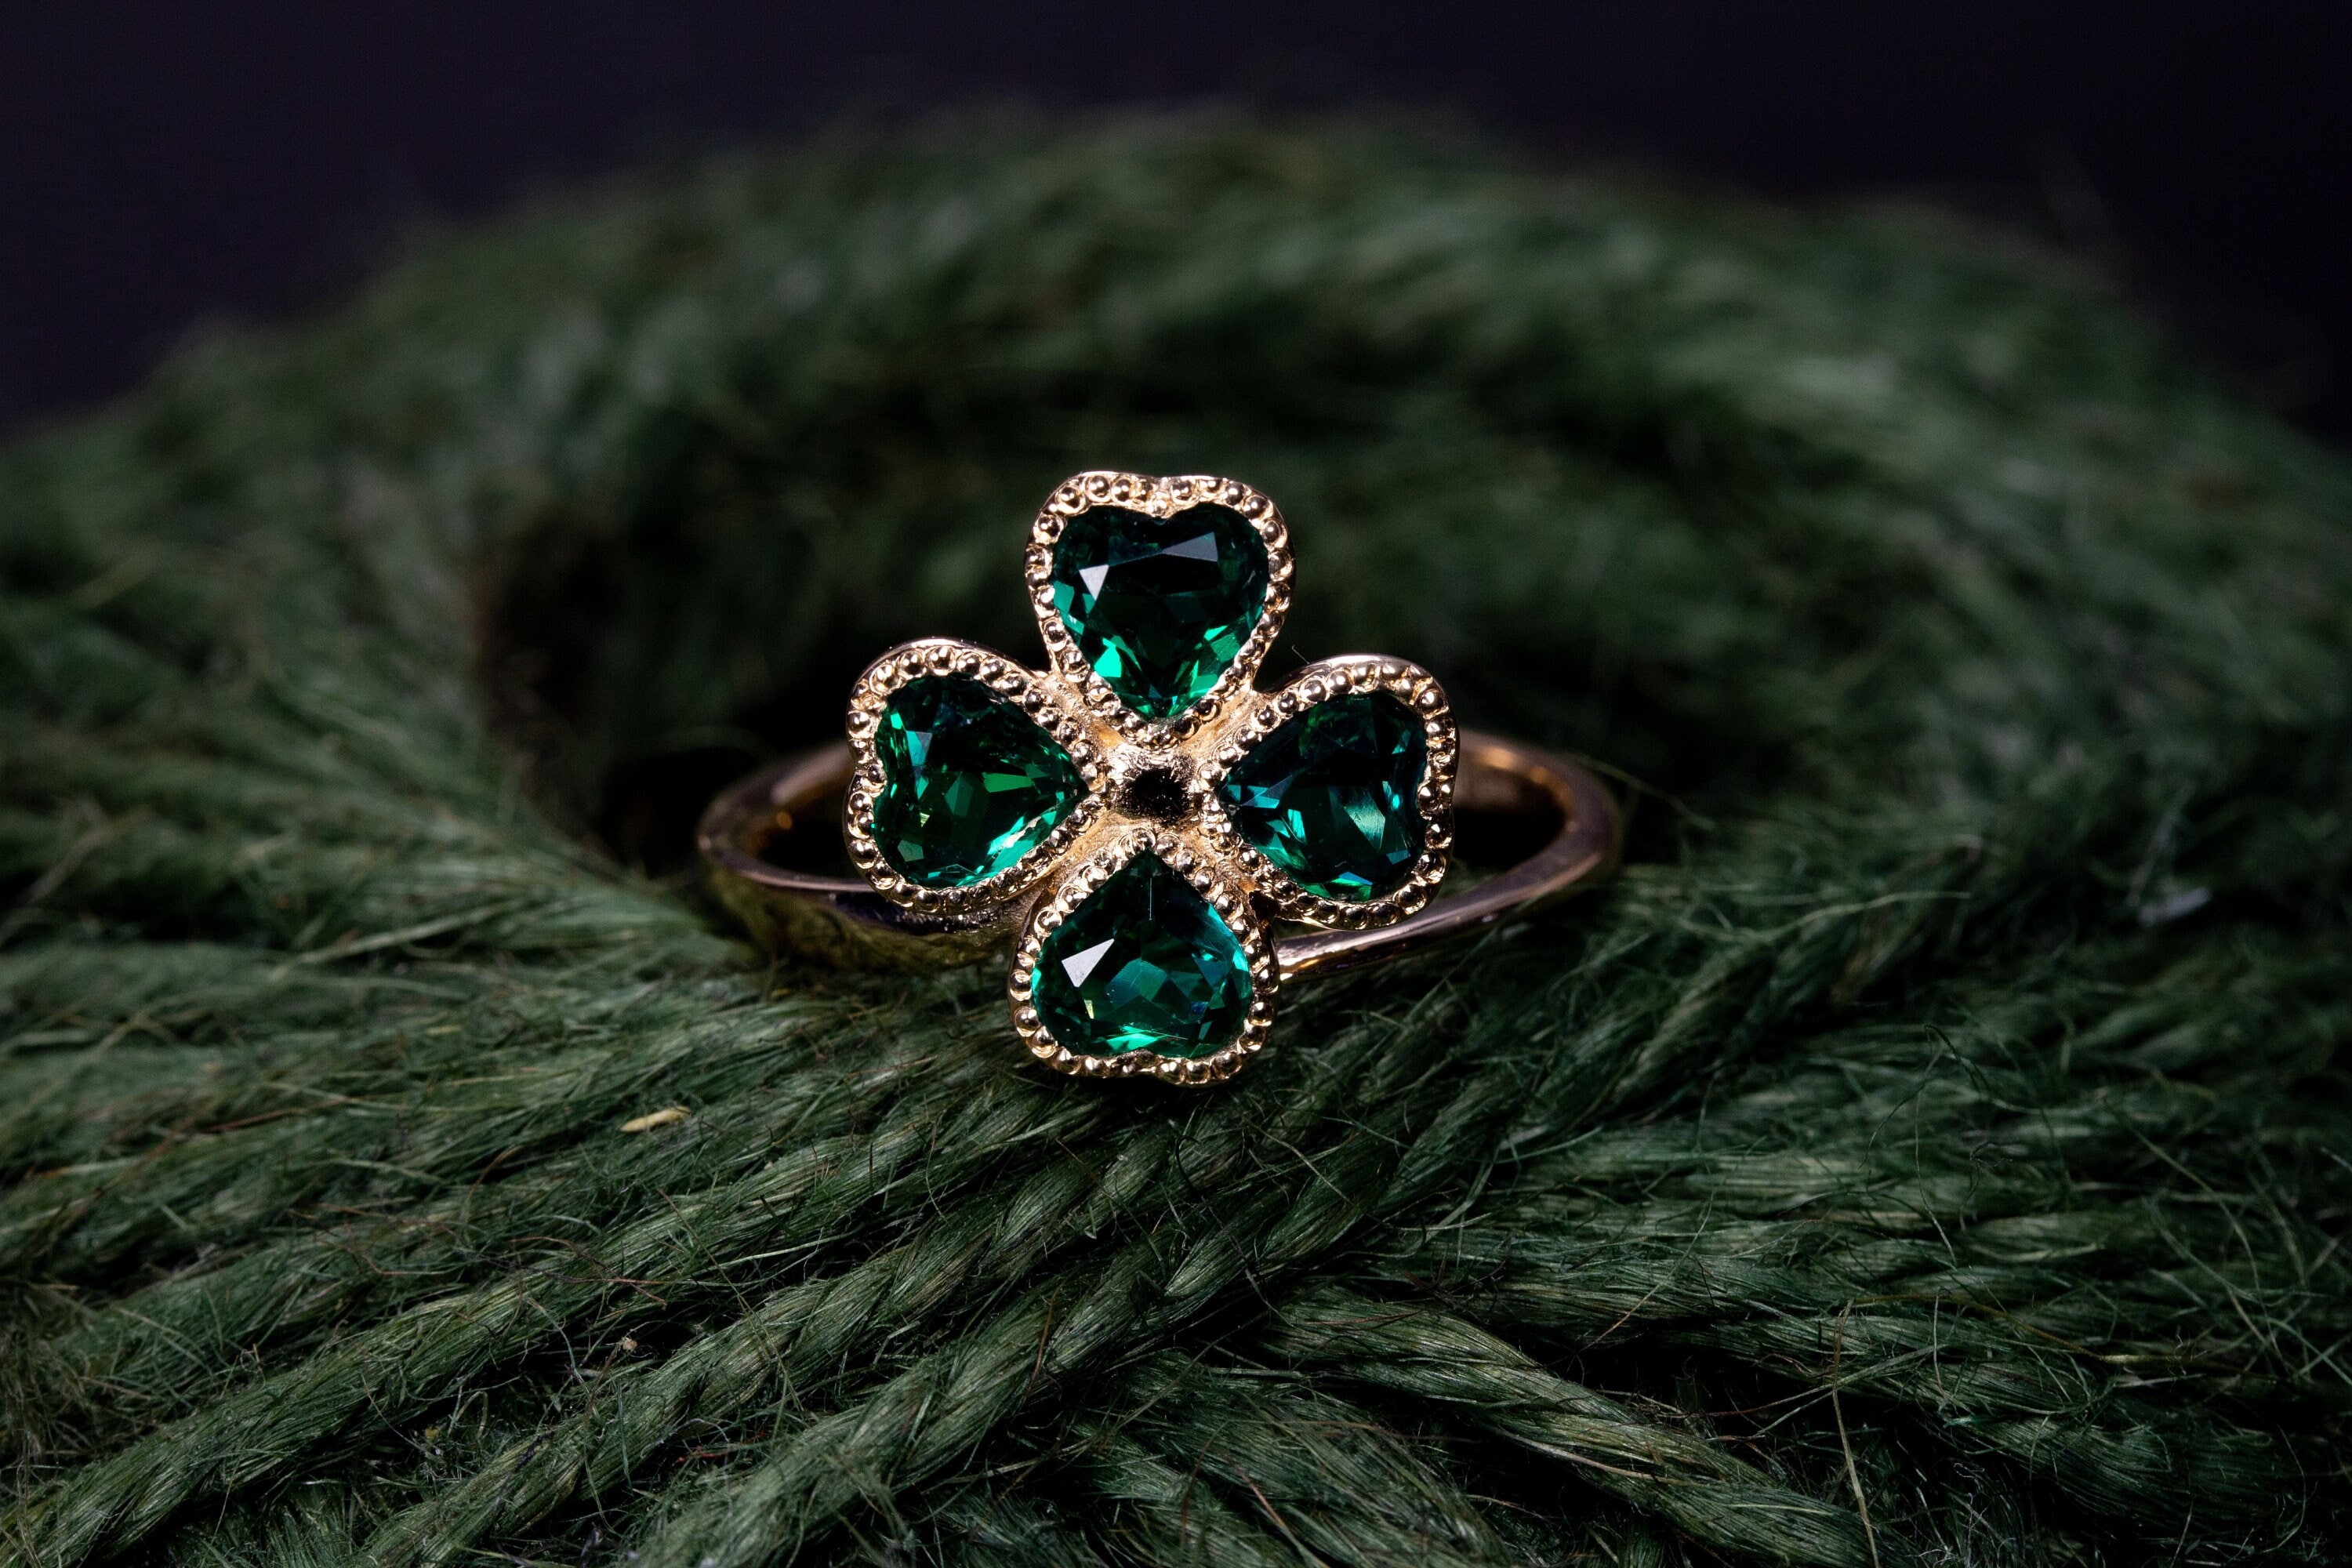 Dalia Emerald Green Clover Bracelet